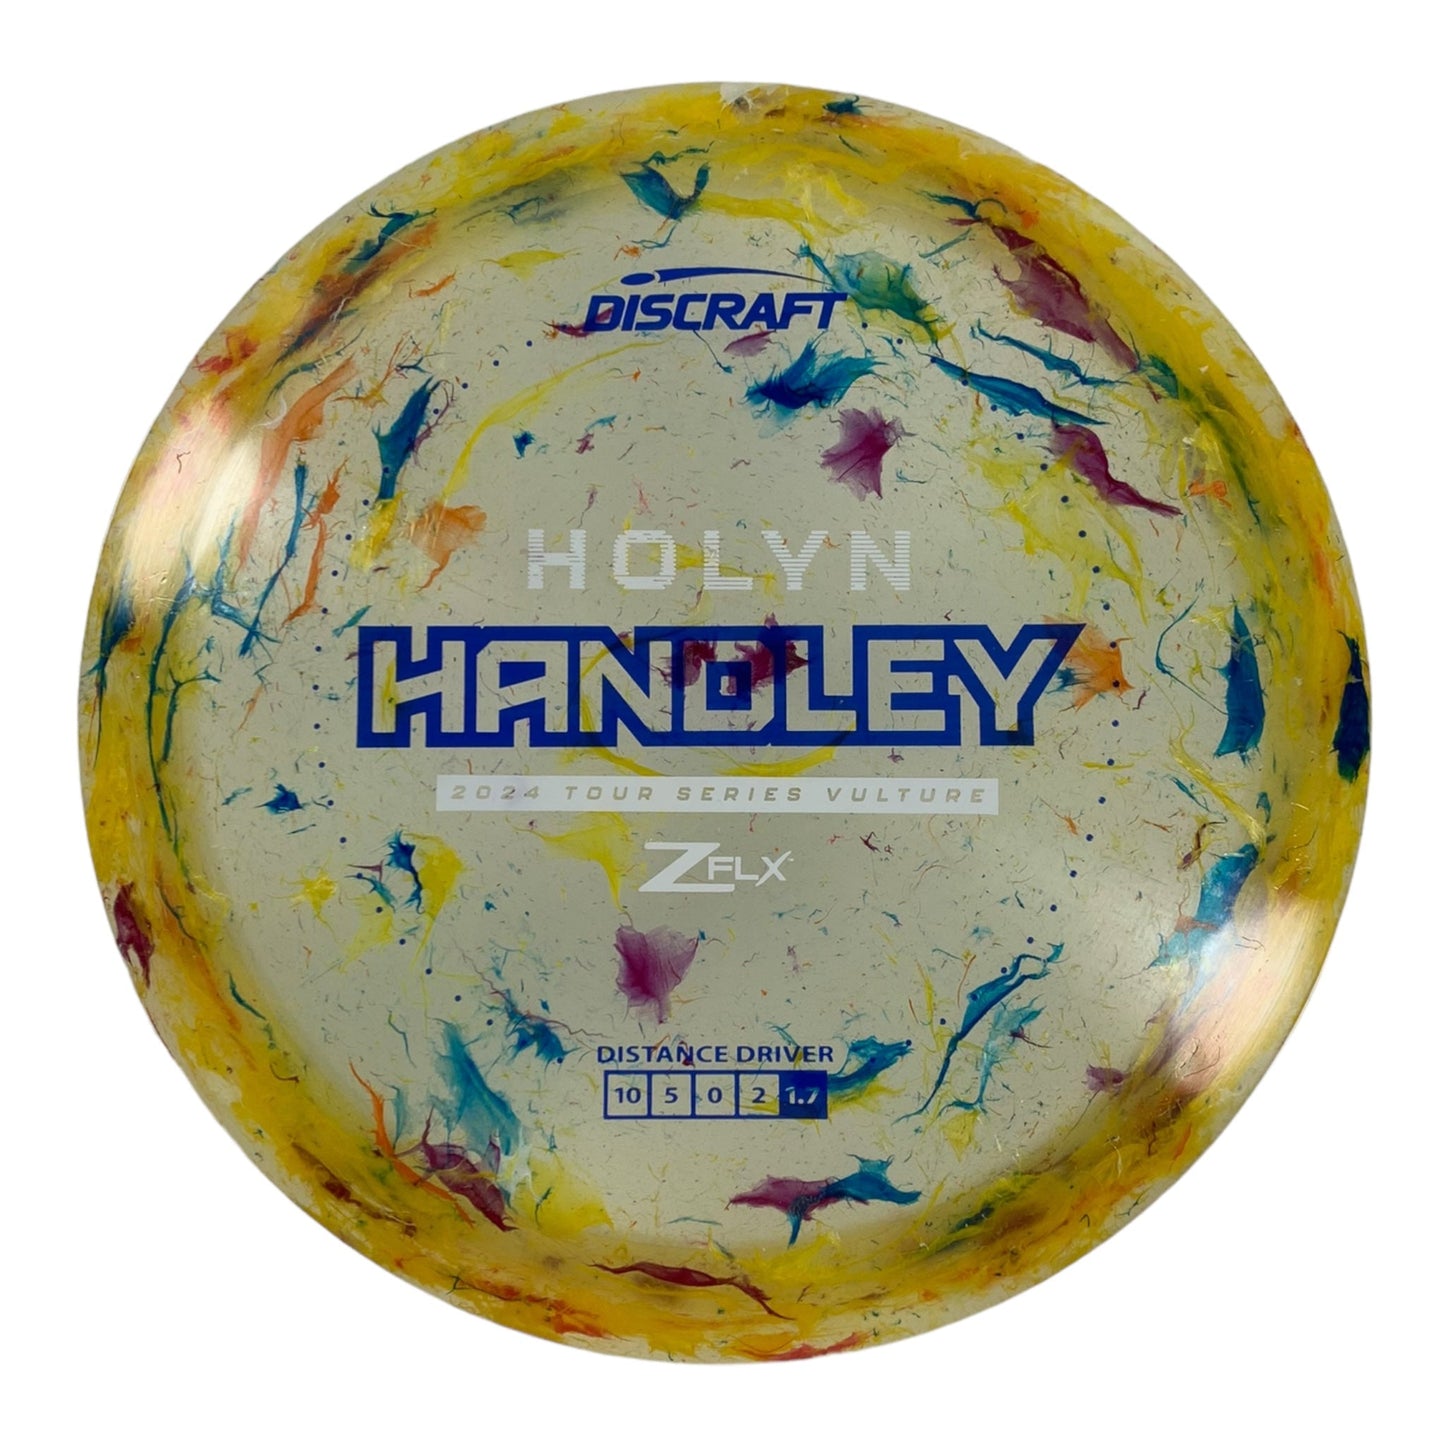 Discraft Vulture | Jawbreaker Z FLX | Yellow/Blue 174g (Holyn Handley) Disc Golf